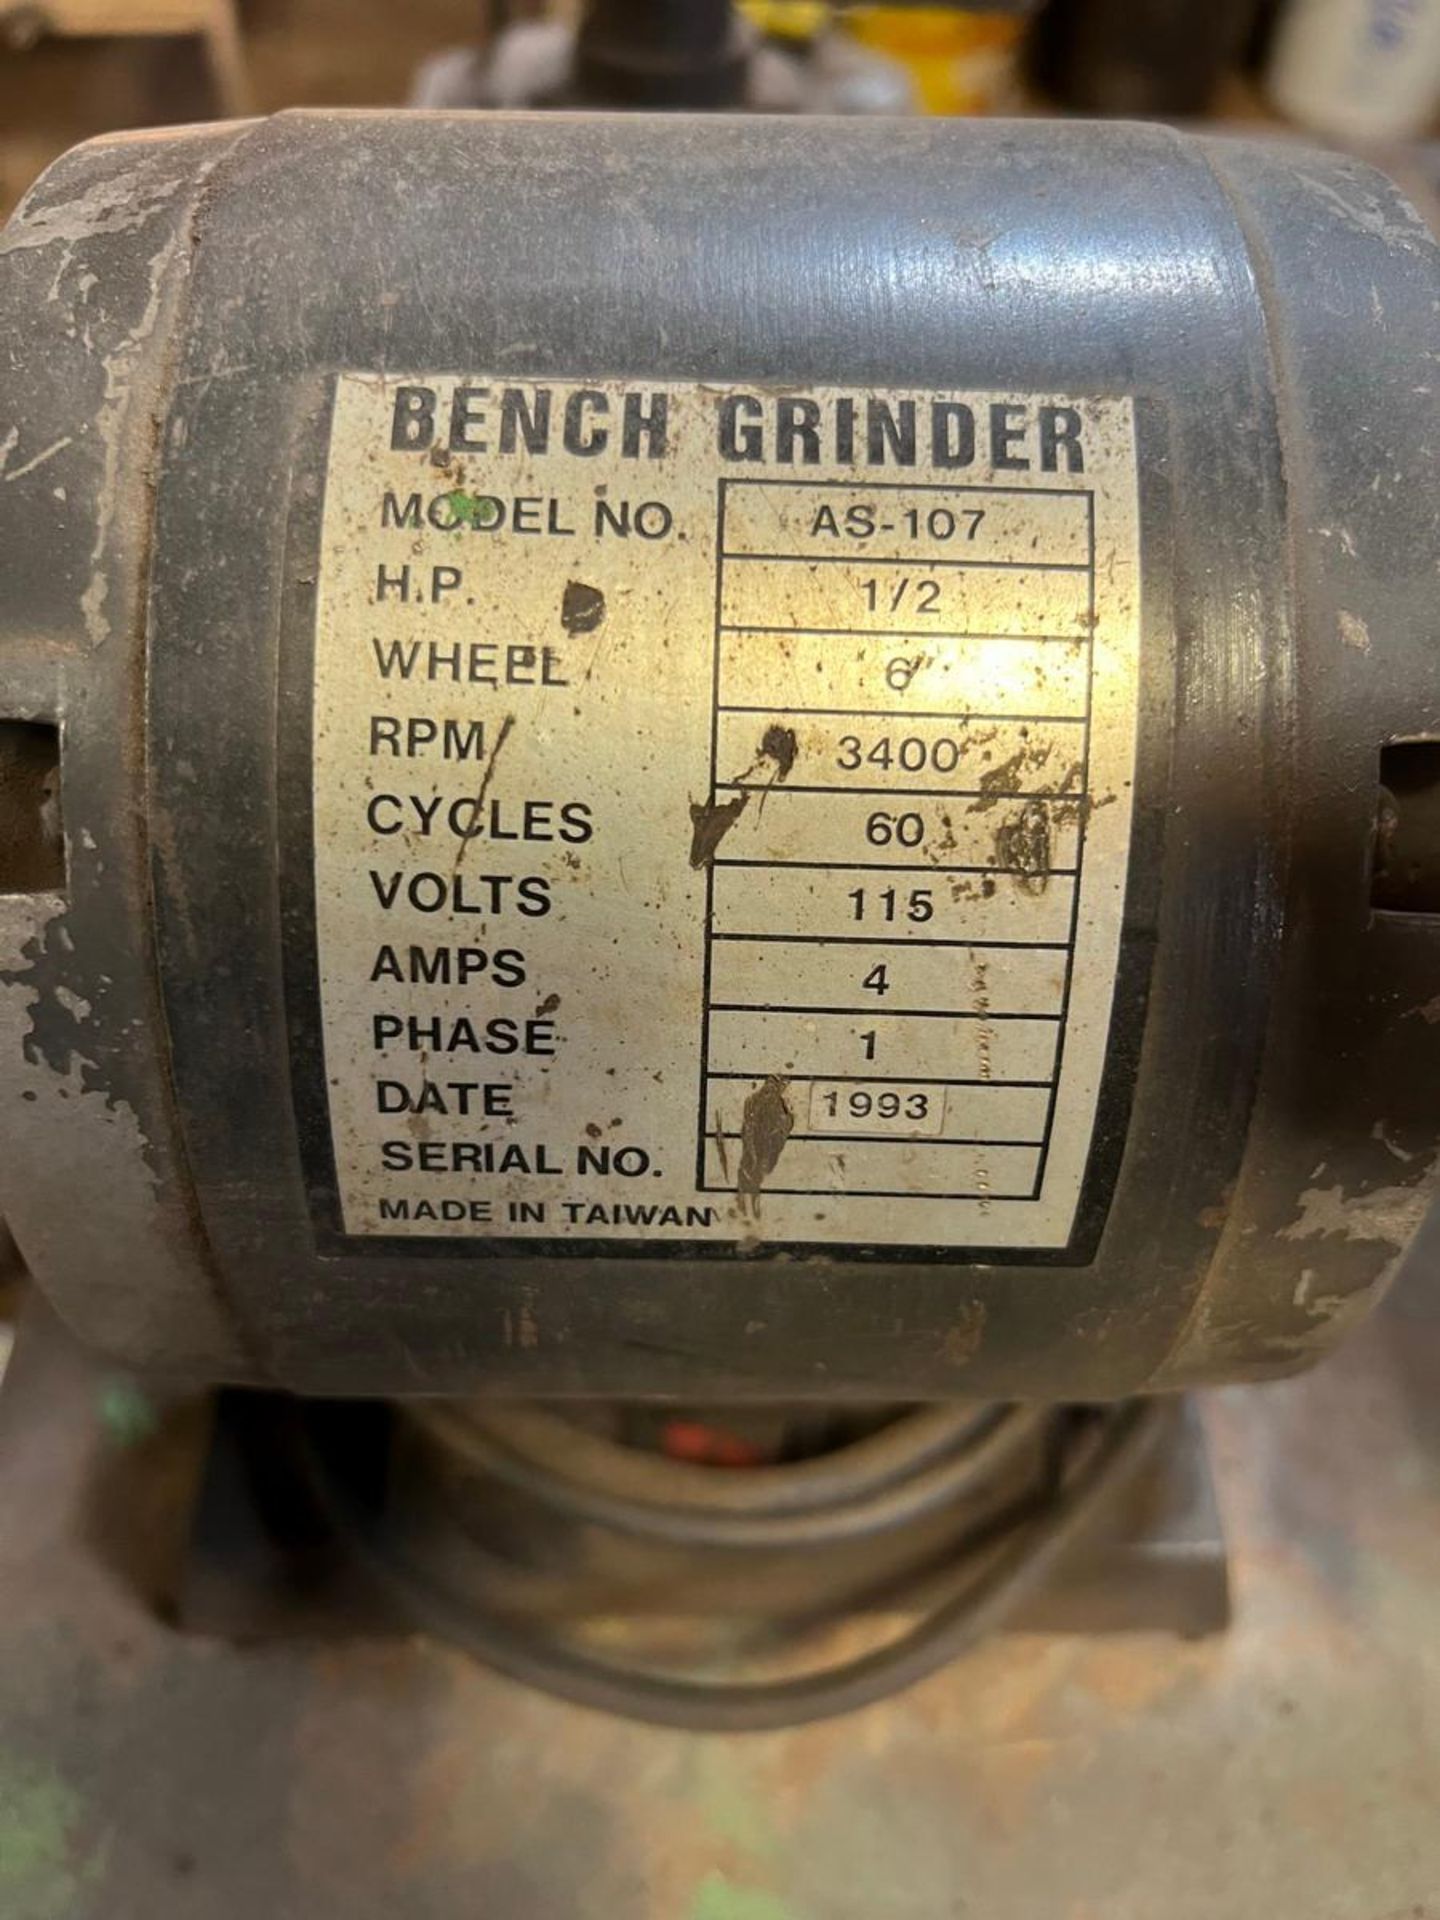 1993 AS-107 Bench grinder - Image 3 of 3